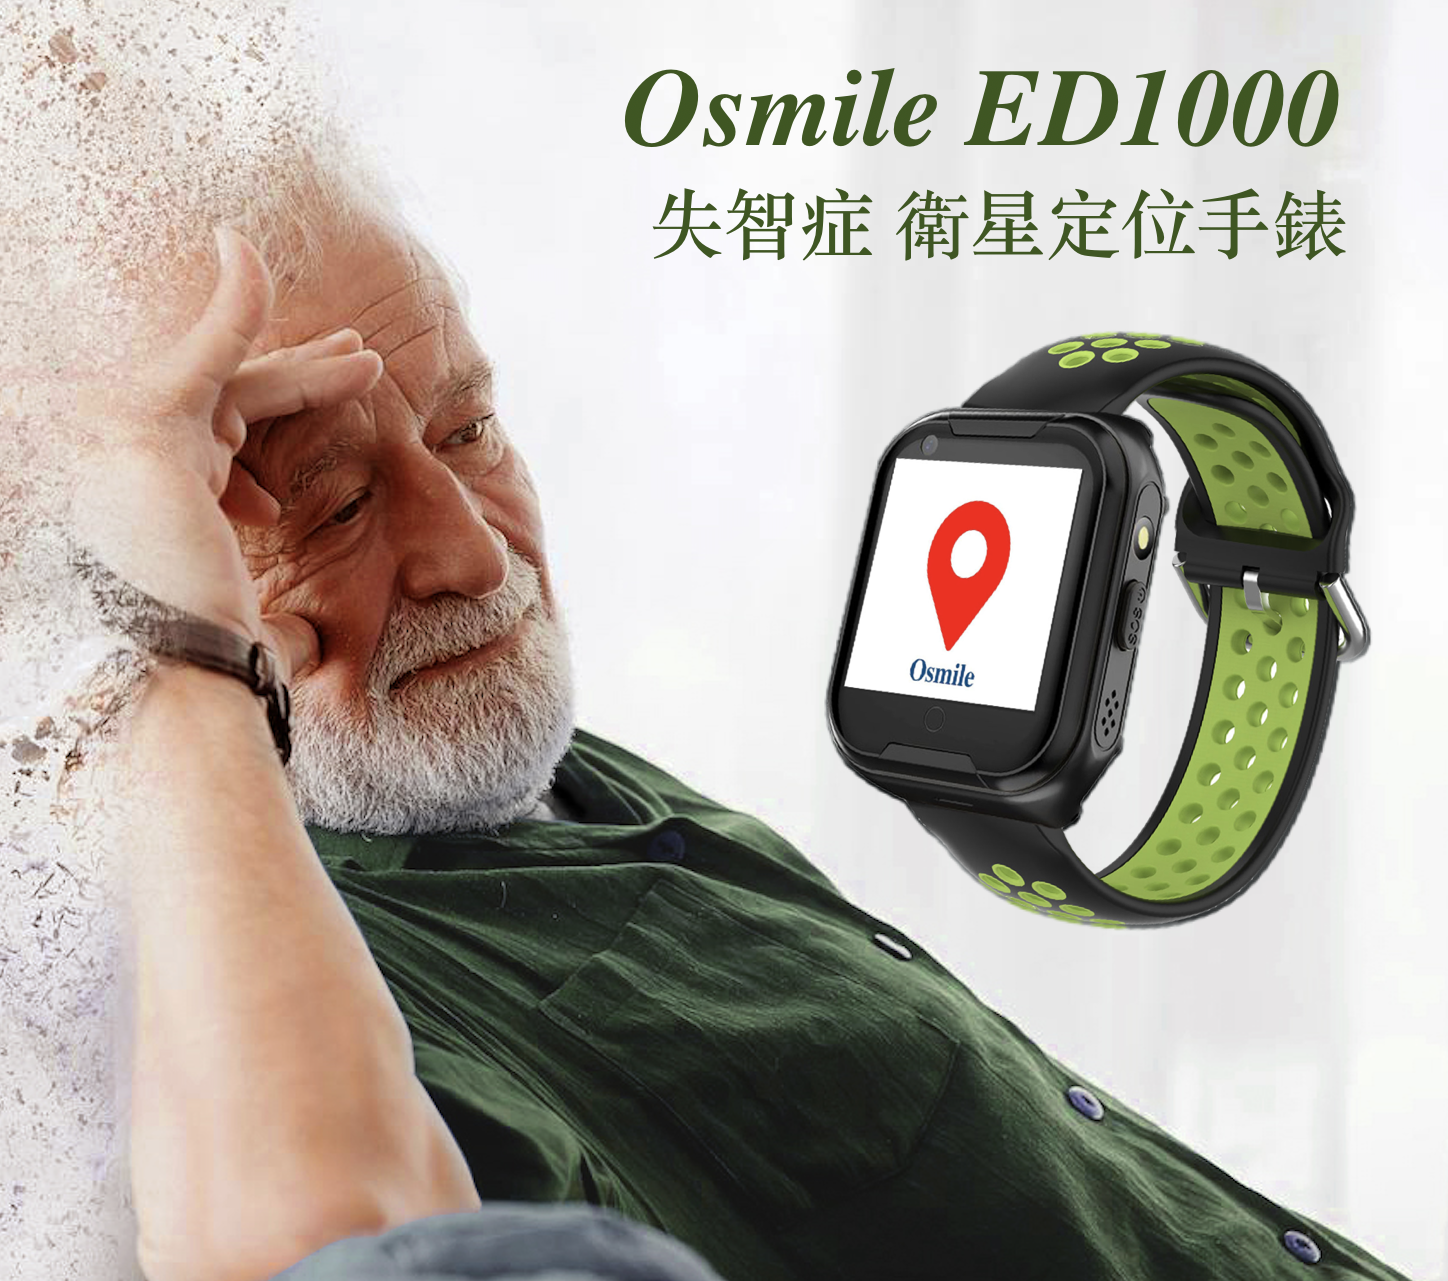 Osmile ED1000 失智症 阿茲海默症 老人定位  GPS/SOS 求救手錶